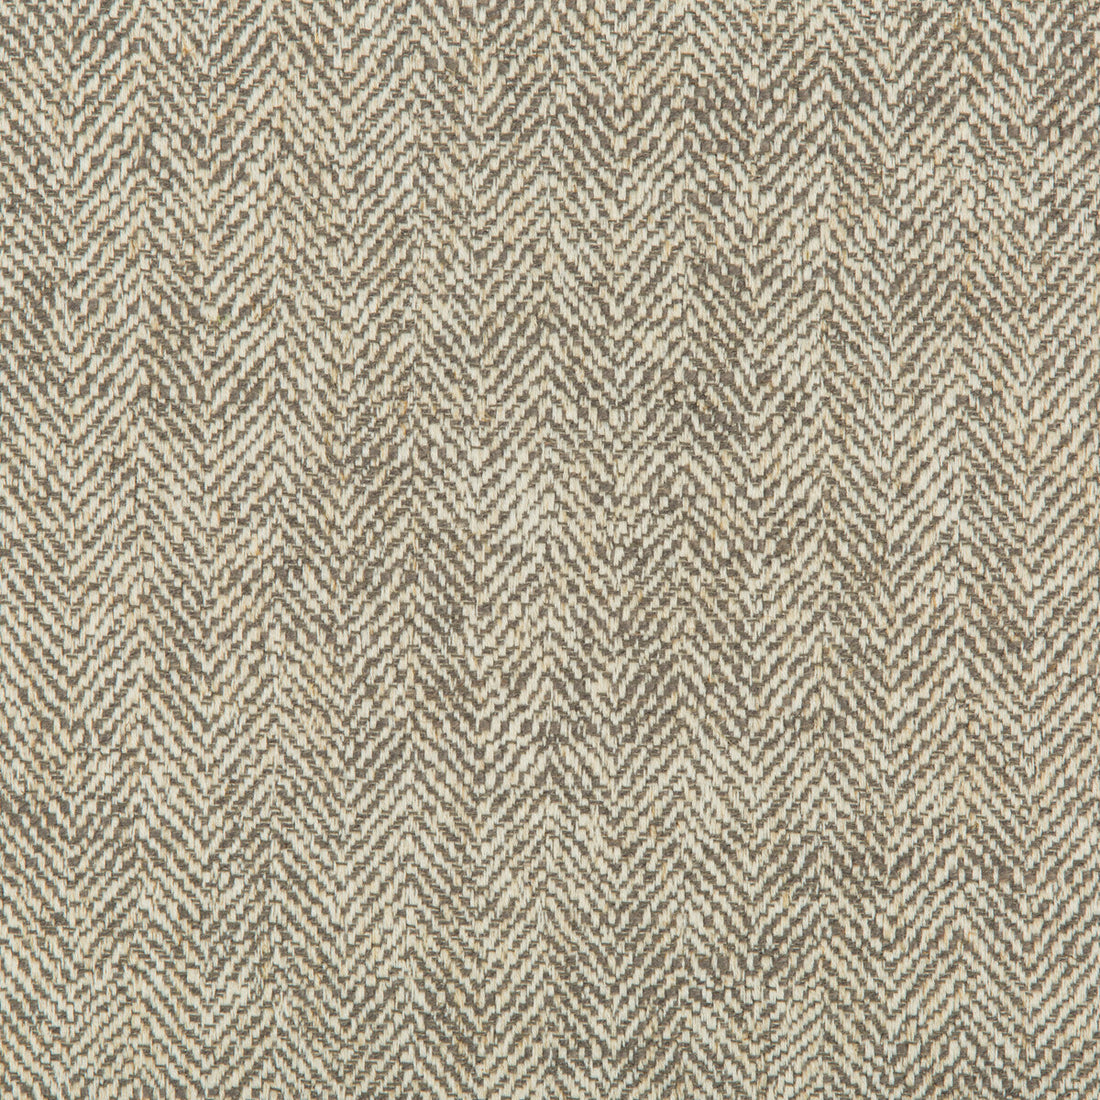 Kravet Smart fabric in 35228-1121 color - pattern 35228.1121.0 - by Kravet Smart in the Performance Kravetarmor collection